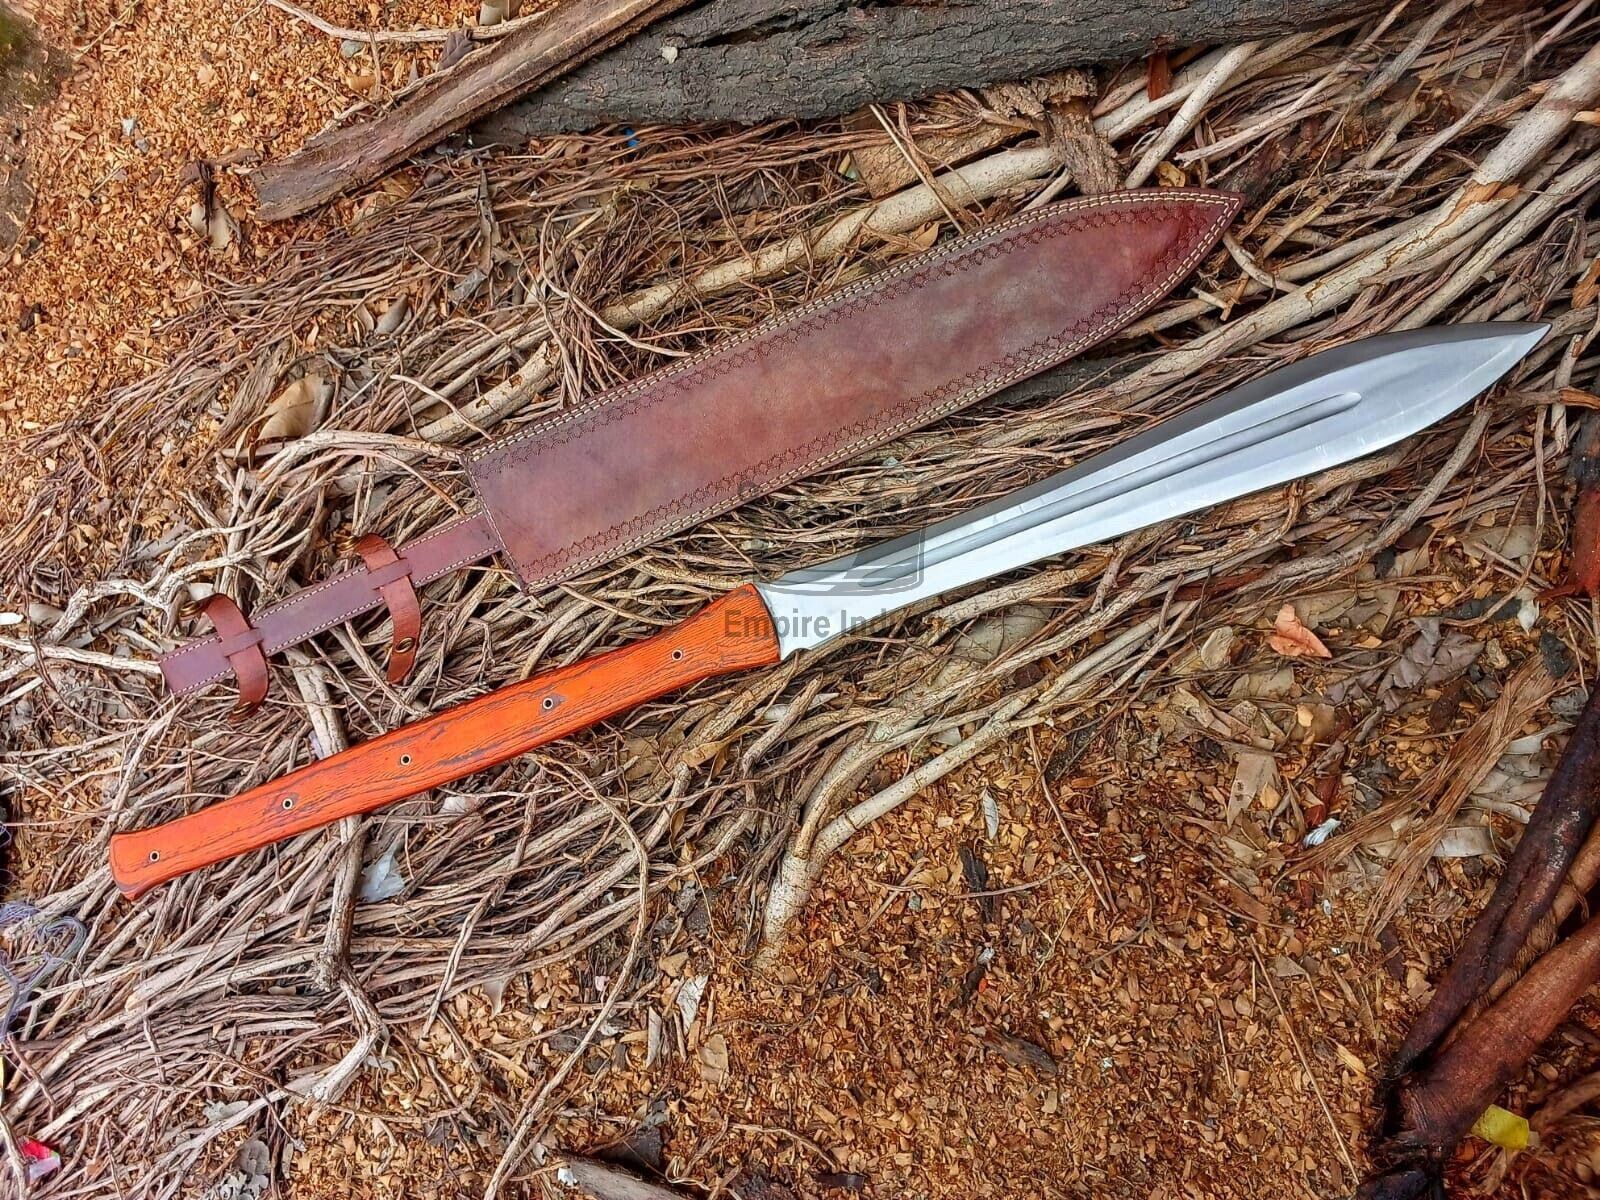 36 Inch FULL TANG Spear Sword, Handmade High Carbon Steel Blade, Battle Ready